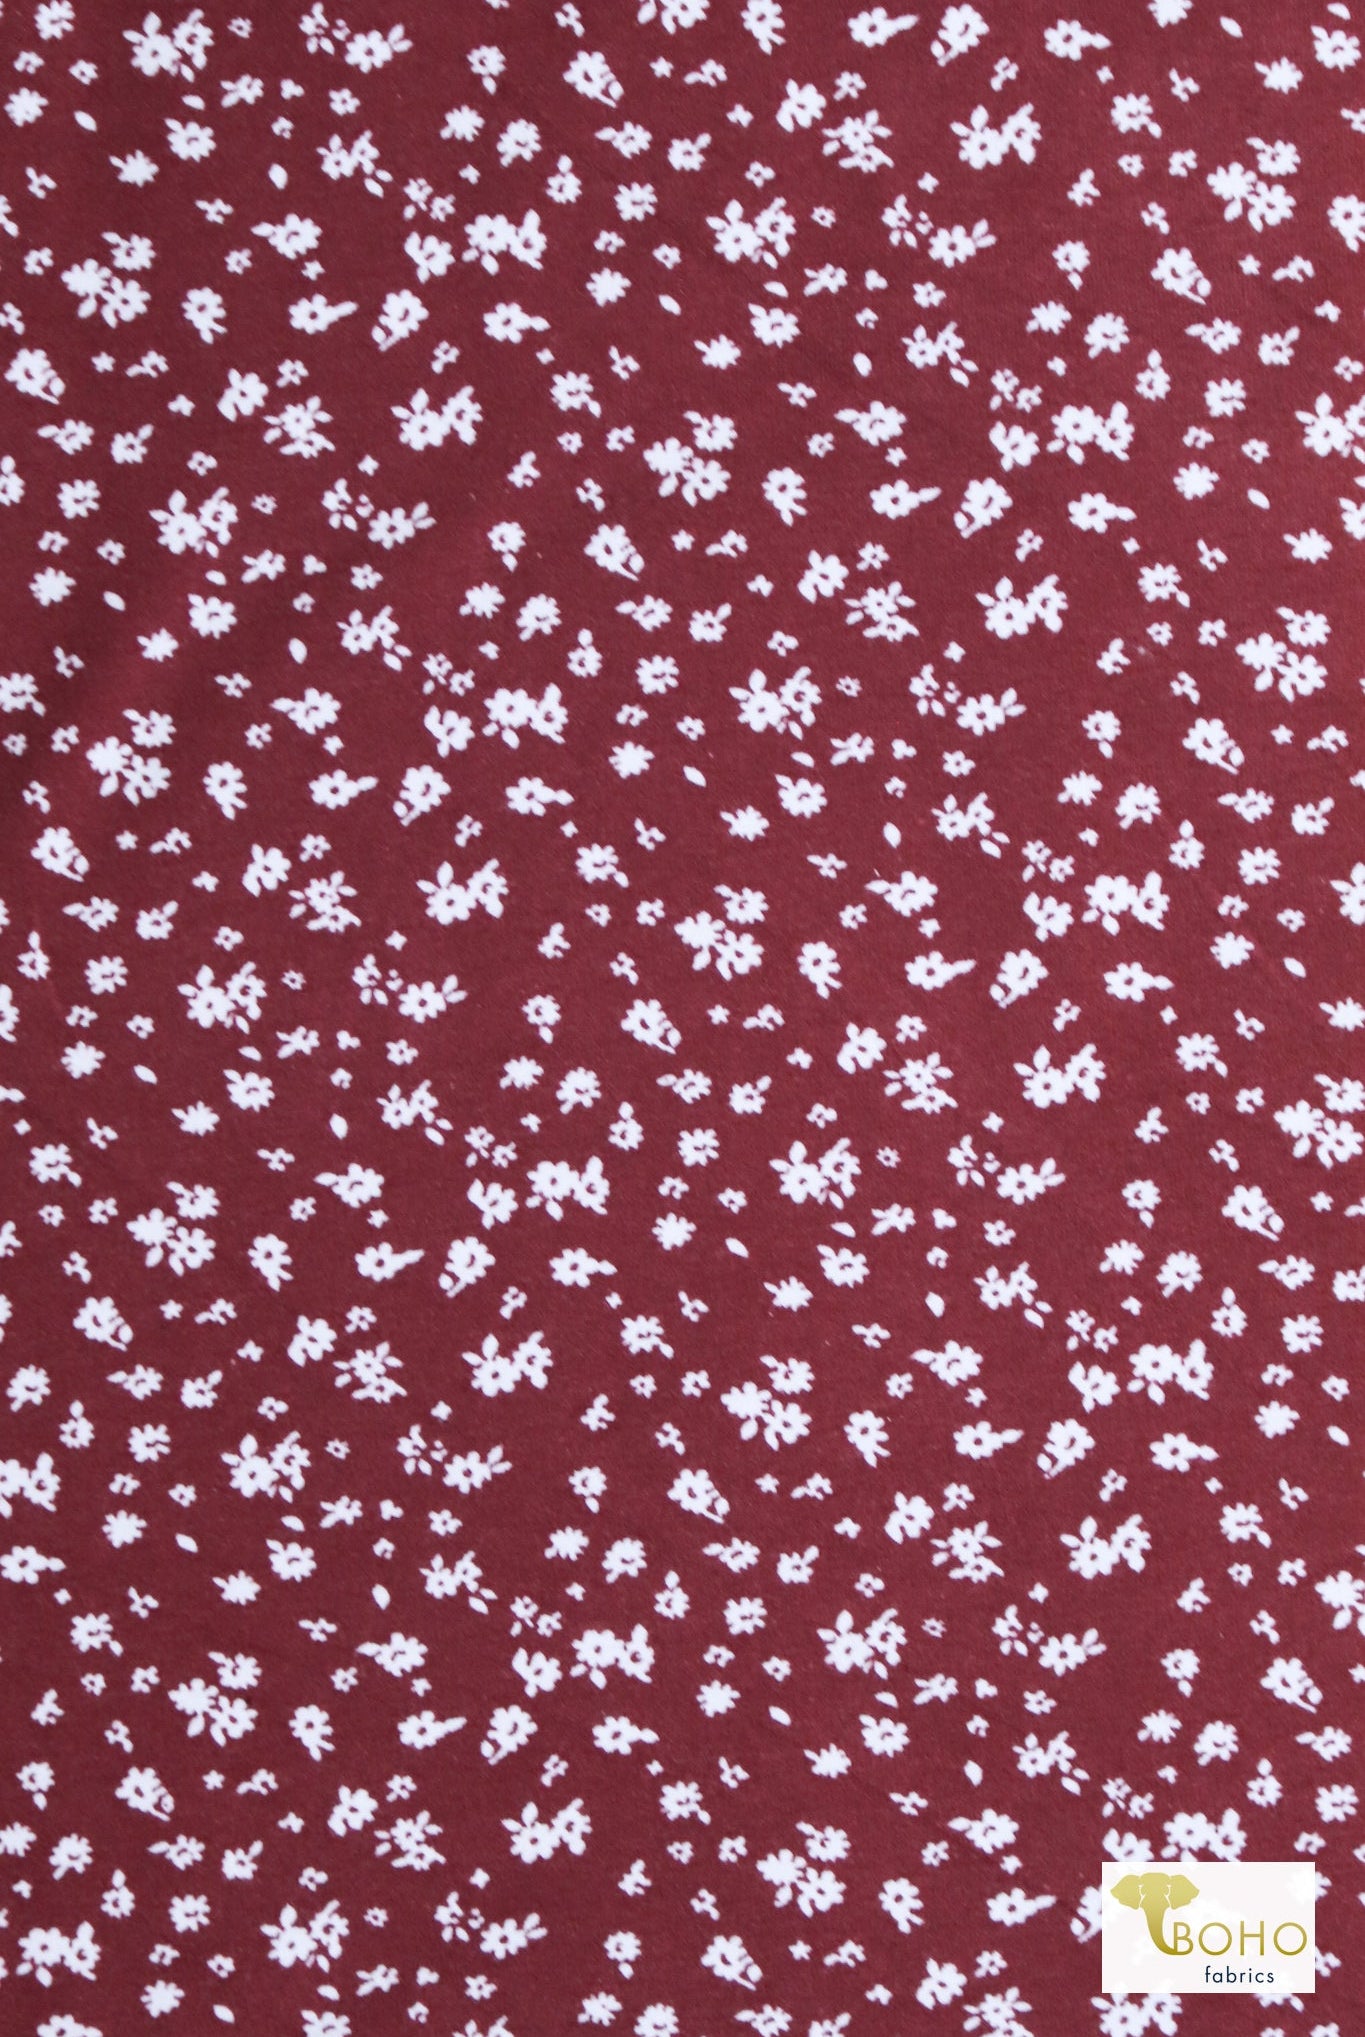 Space Gardens on Red, Cotton Spandex - Boho Fabrics